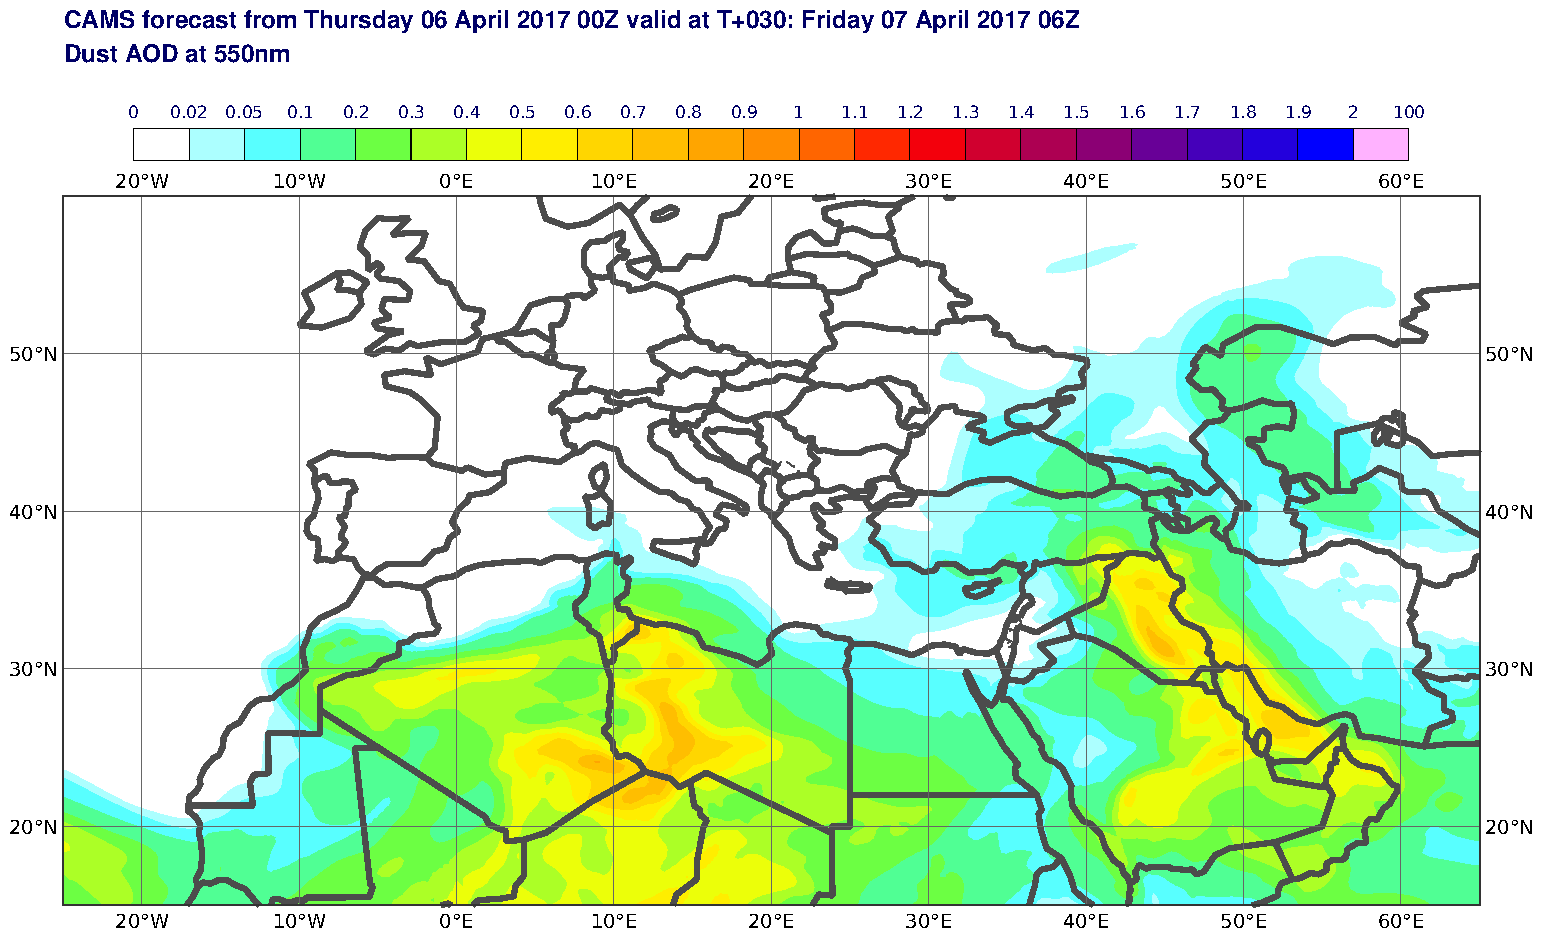 Dust AOD at 550nm valid at T30 - 2017-04-07 06:00